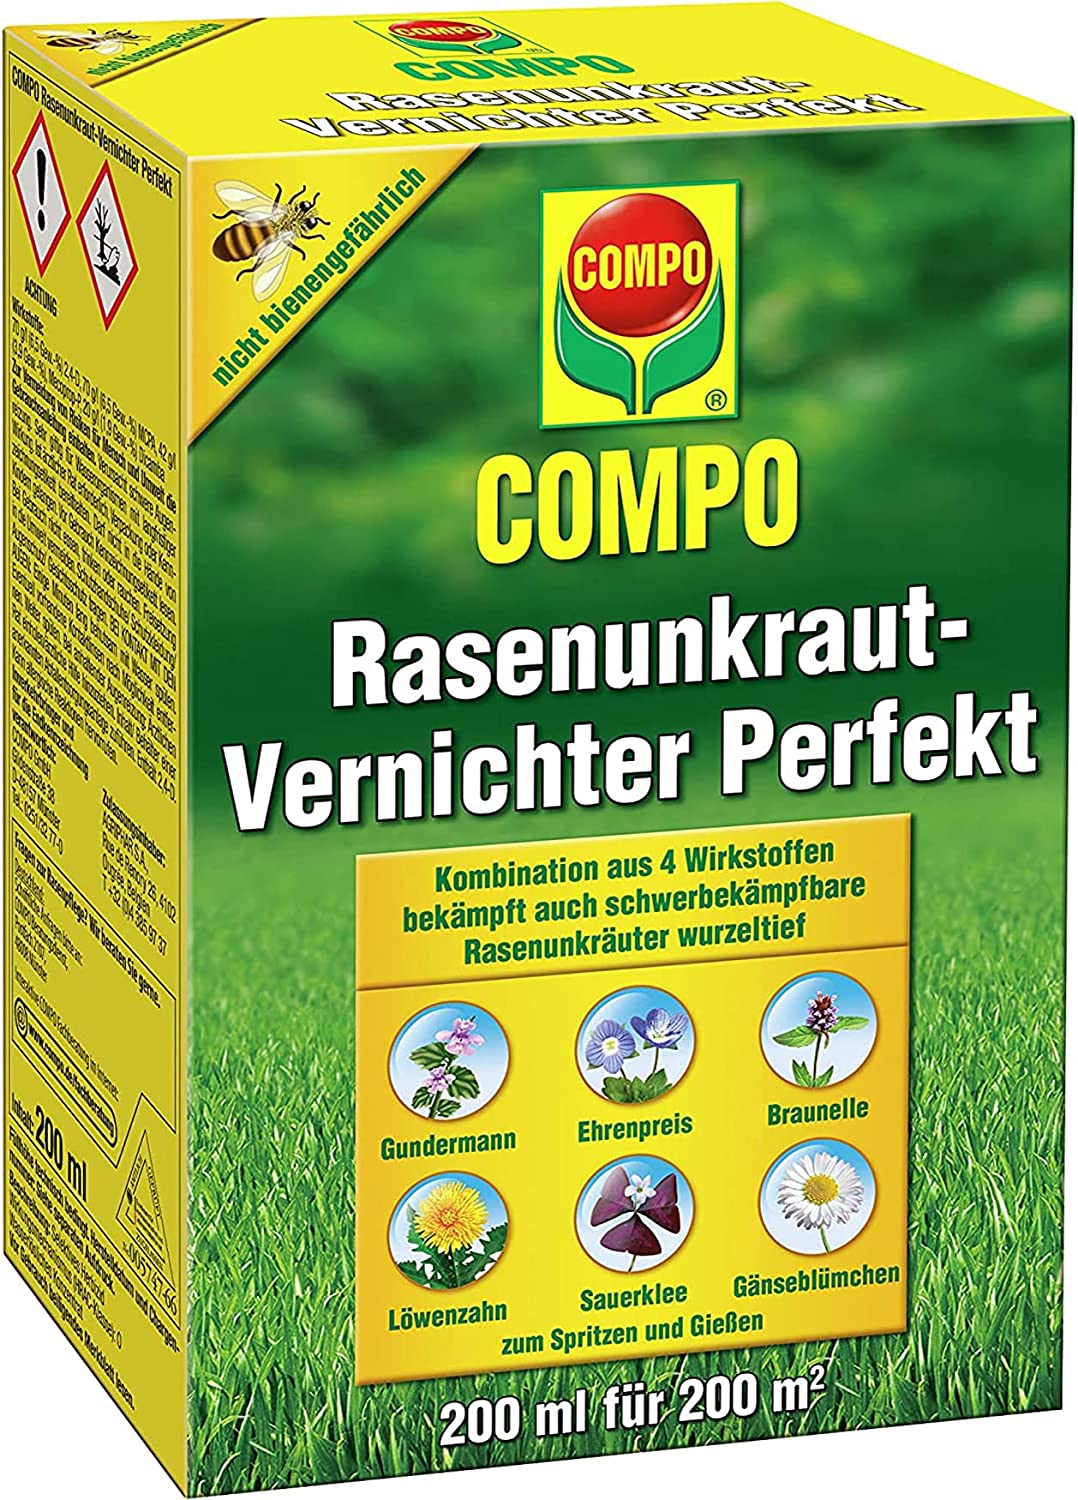 COMPO Rasenunkraut-Vernichter Perfekt 200 ml für 200 m²